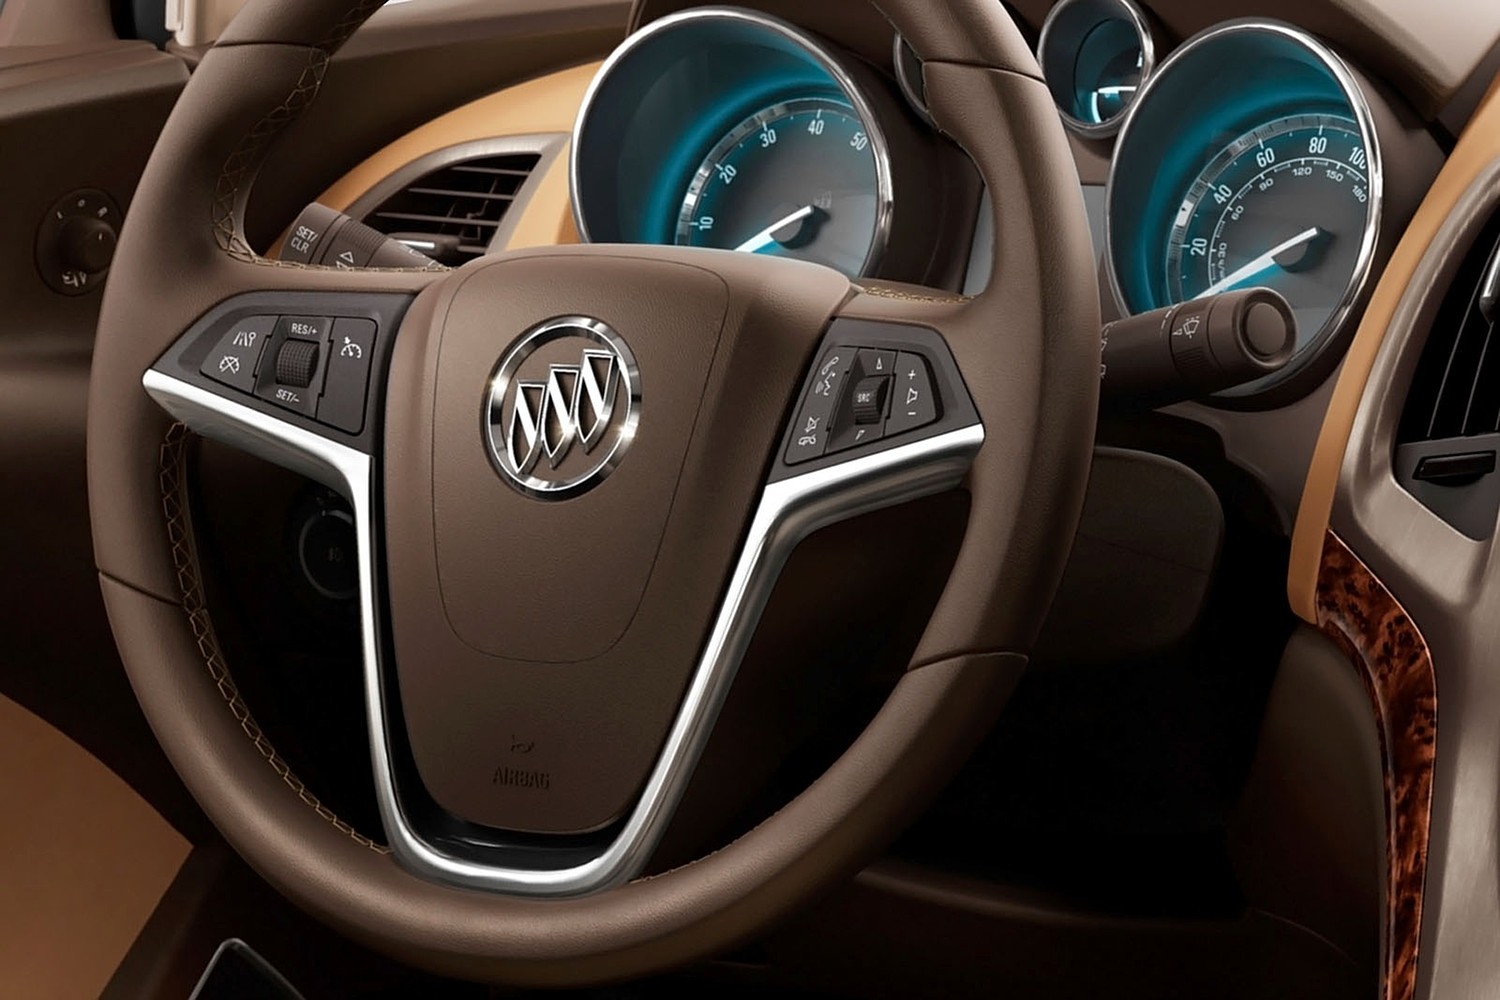 Buick Verano Sedan Steering Wheel Detail (2013 model year shown)